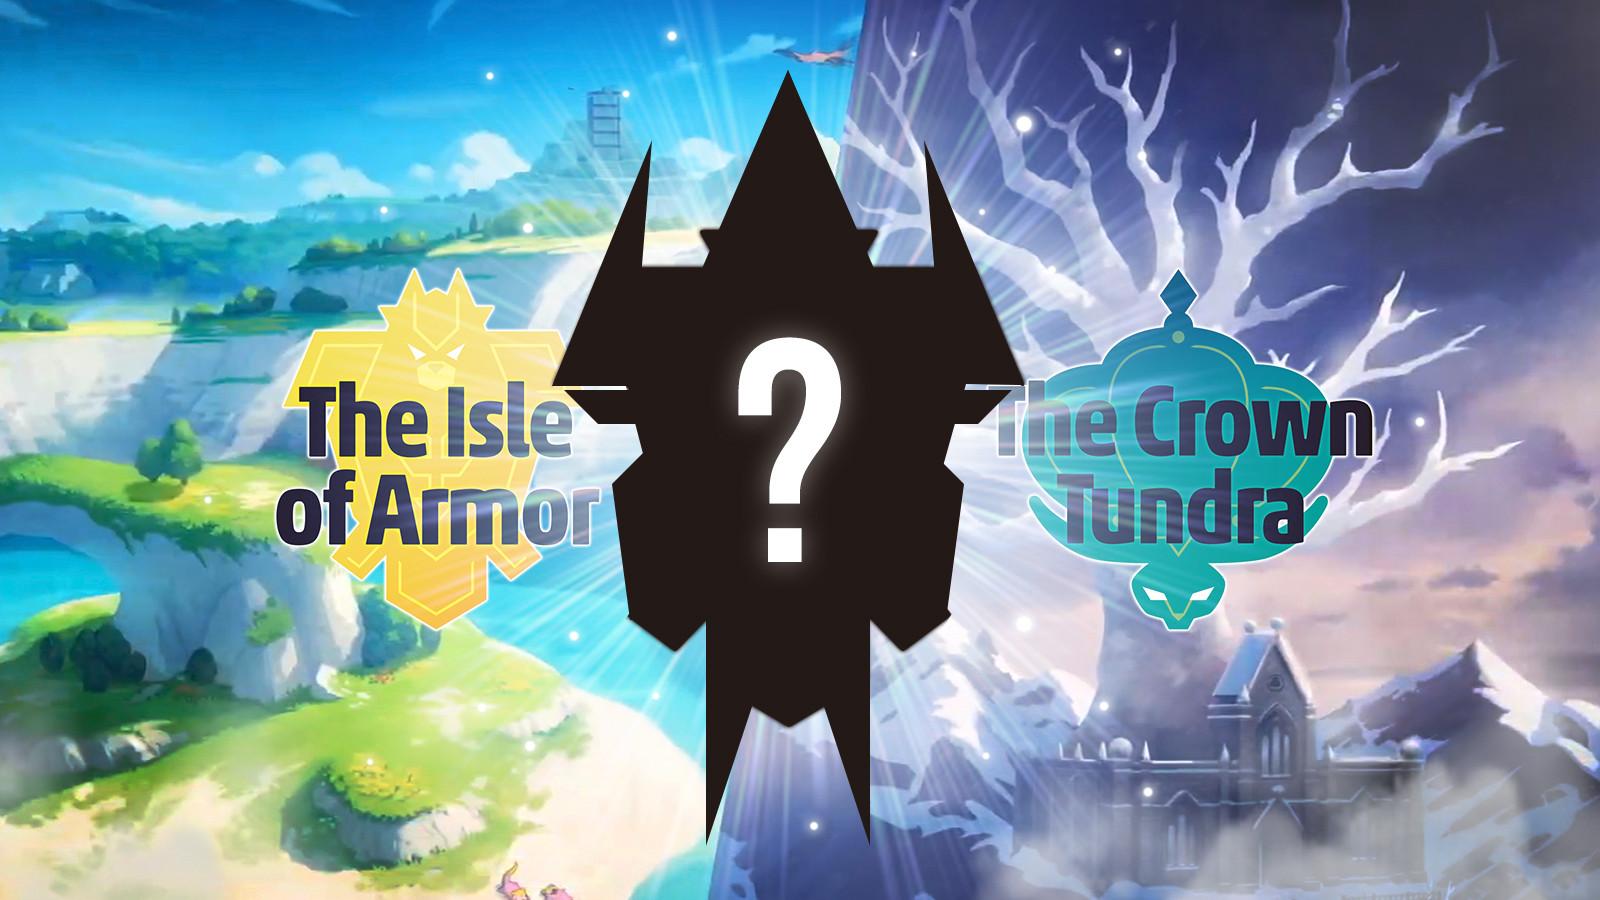 Pokemon Sword / Shield: the Isle of Armor Custom Case 